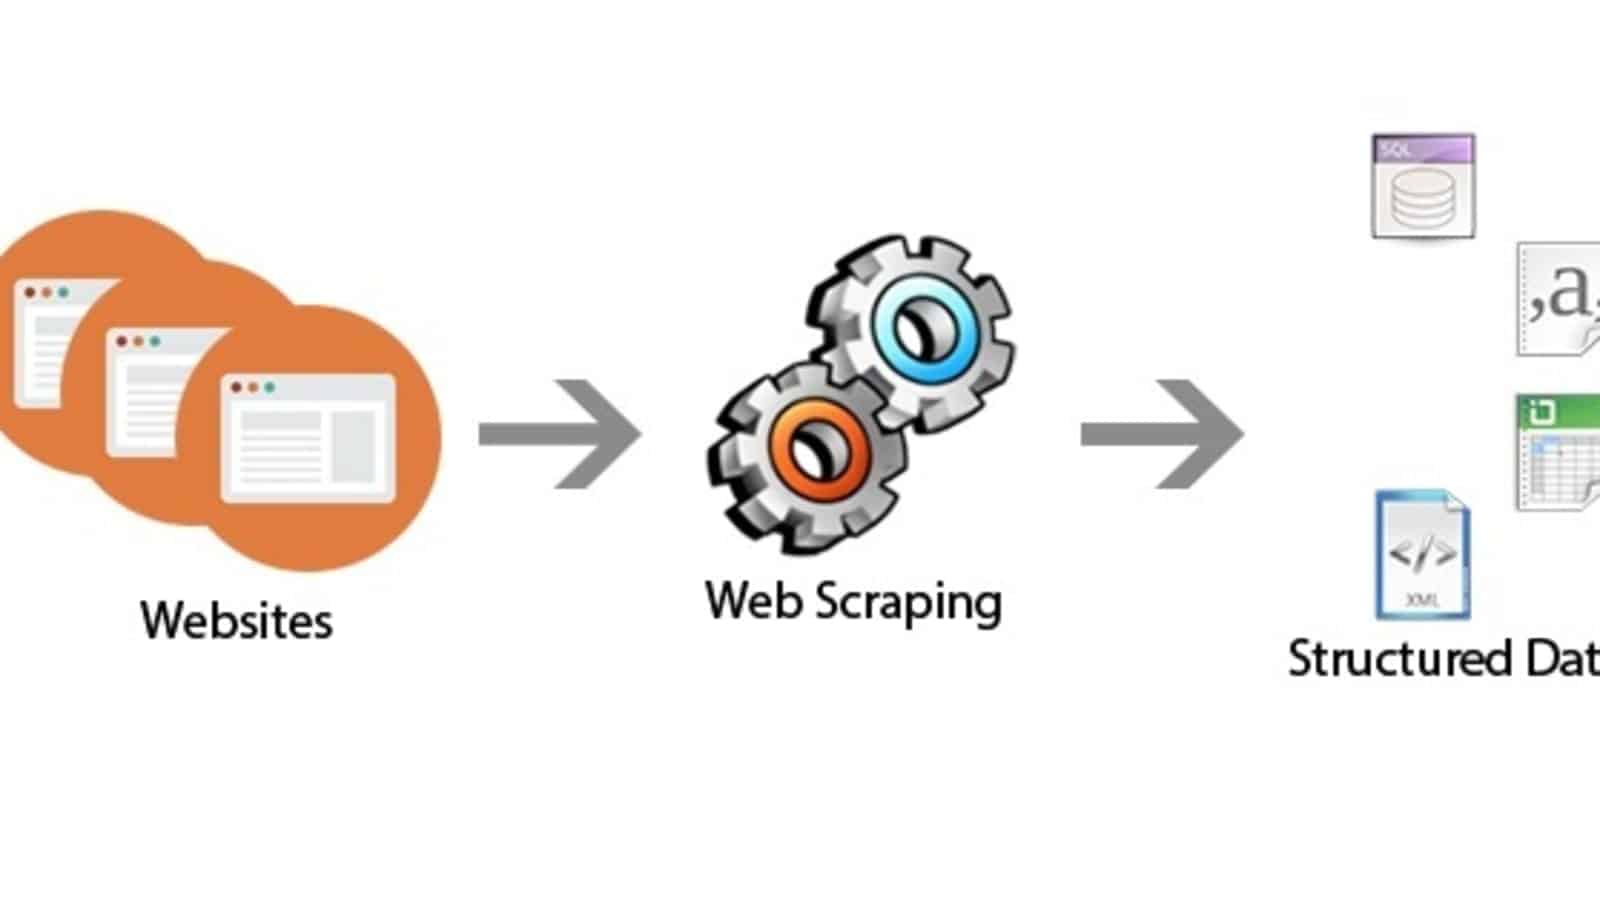 Web Scraping Applications